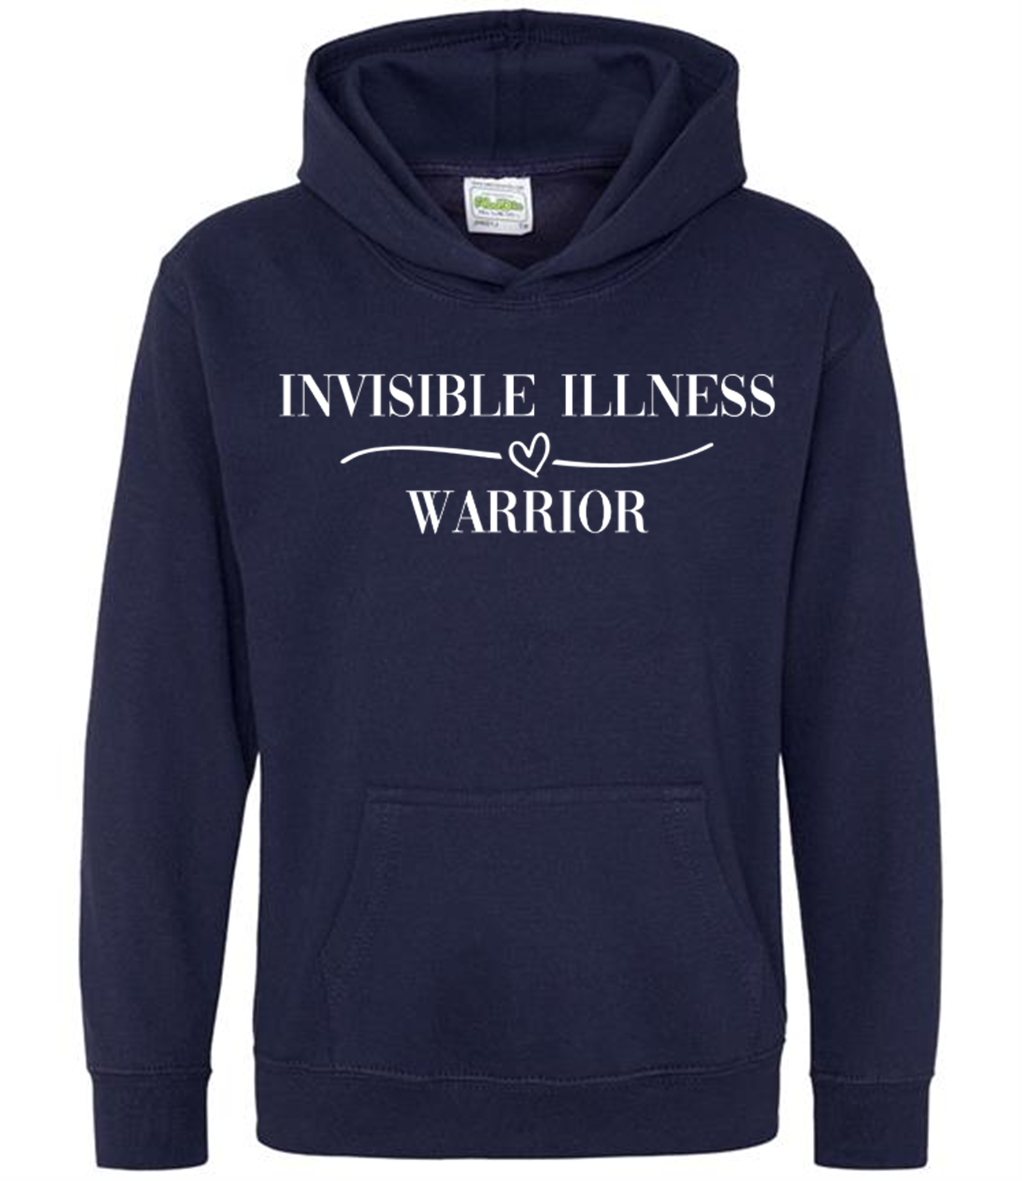 Invisible Illness Warrior Kids Hoodie